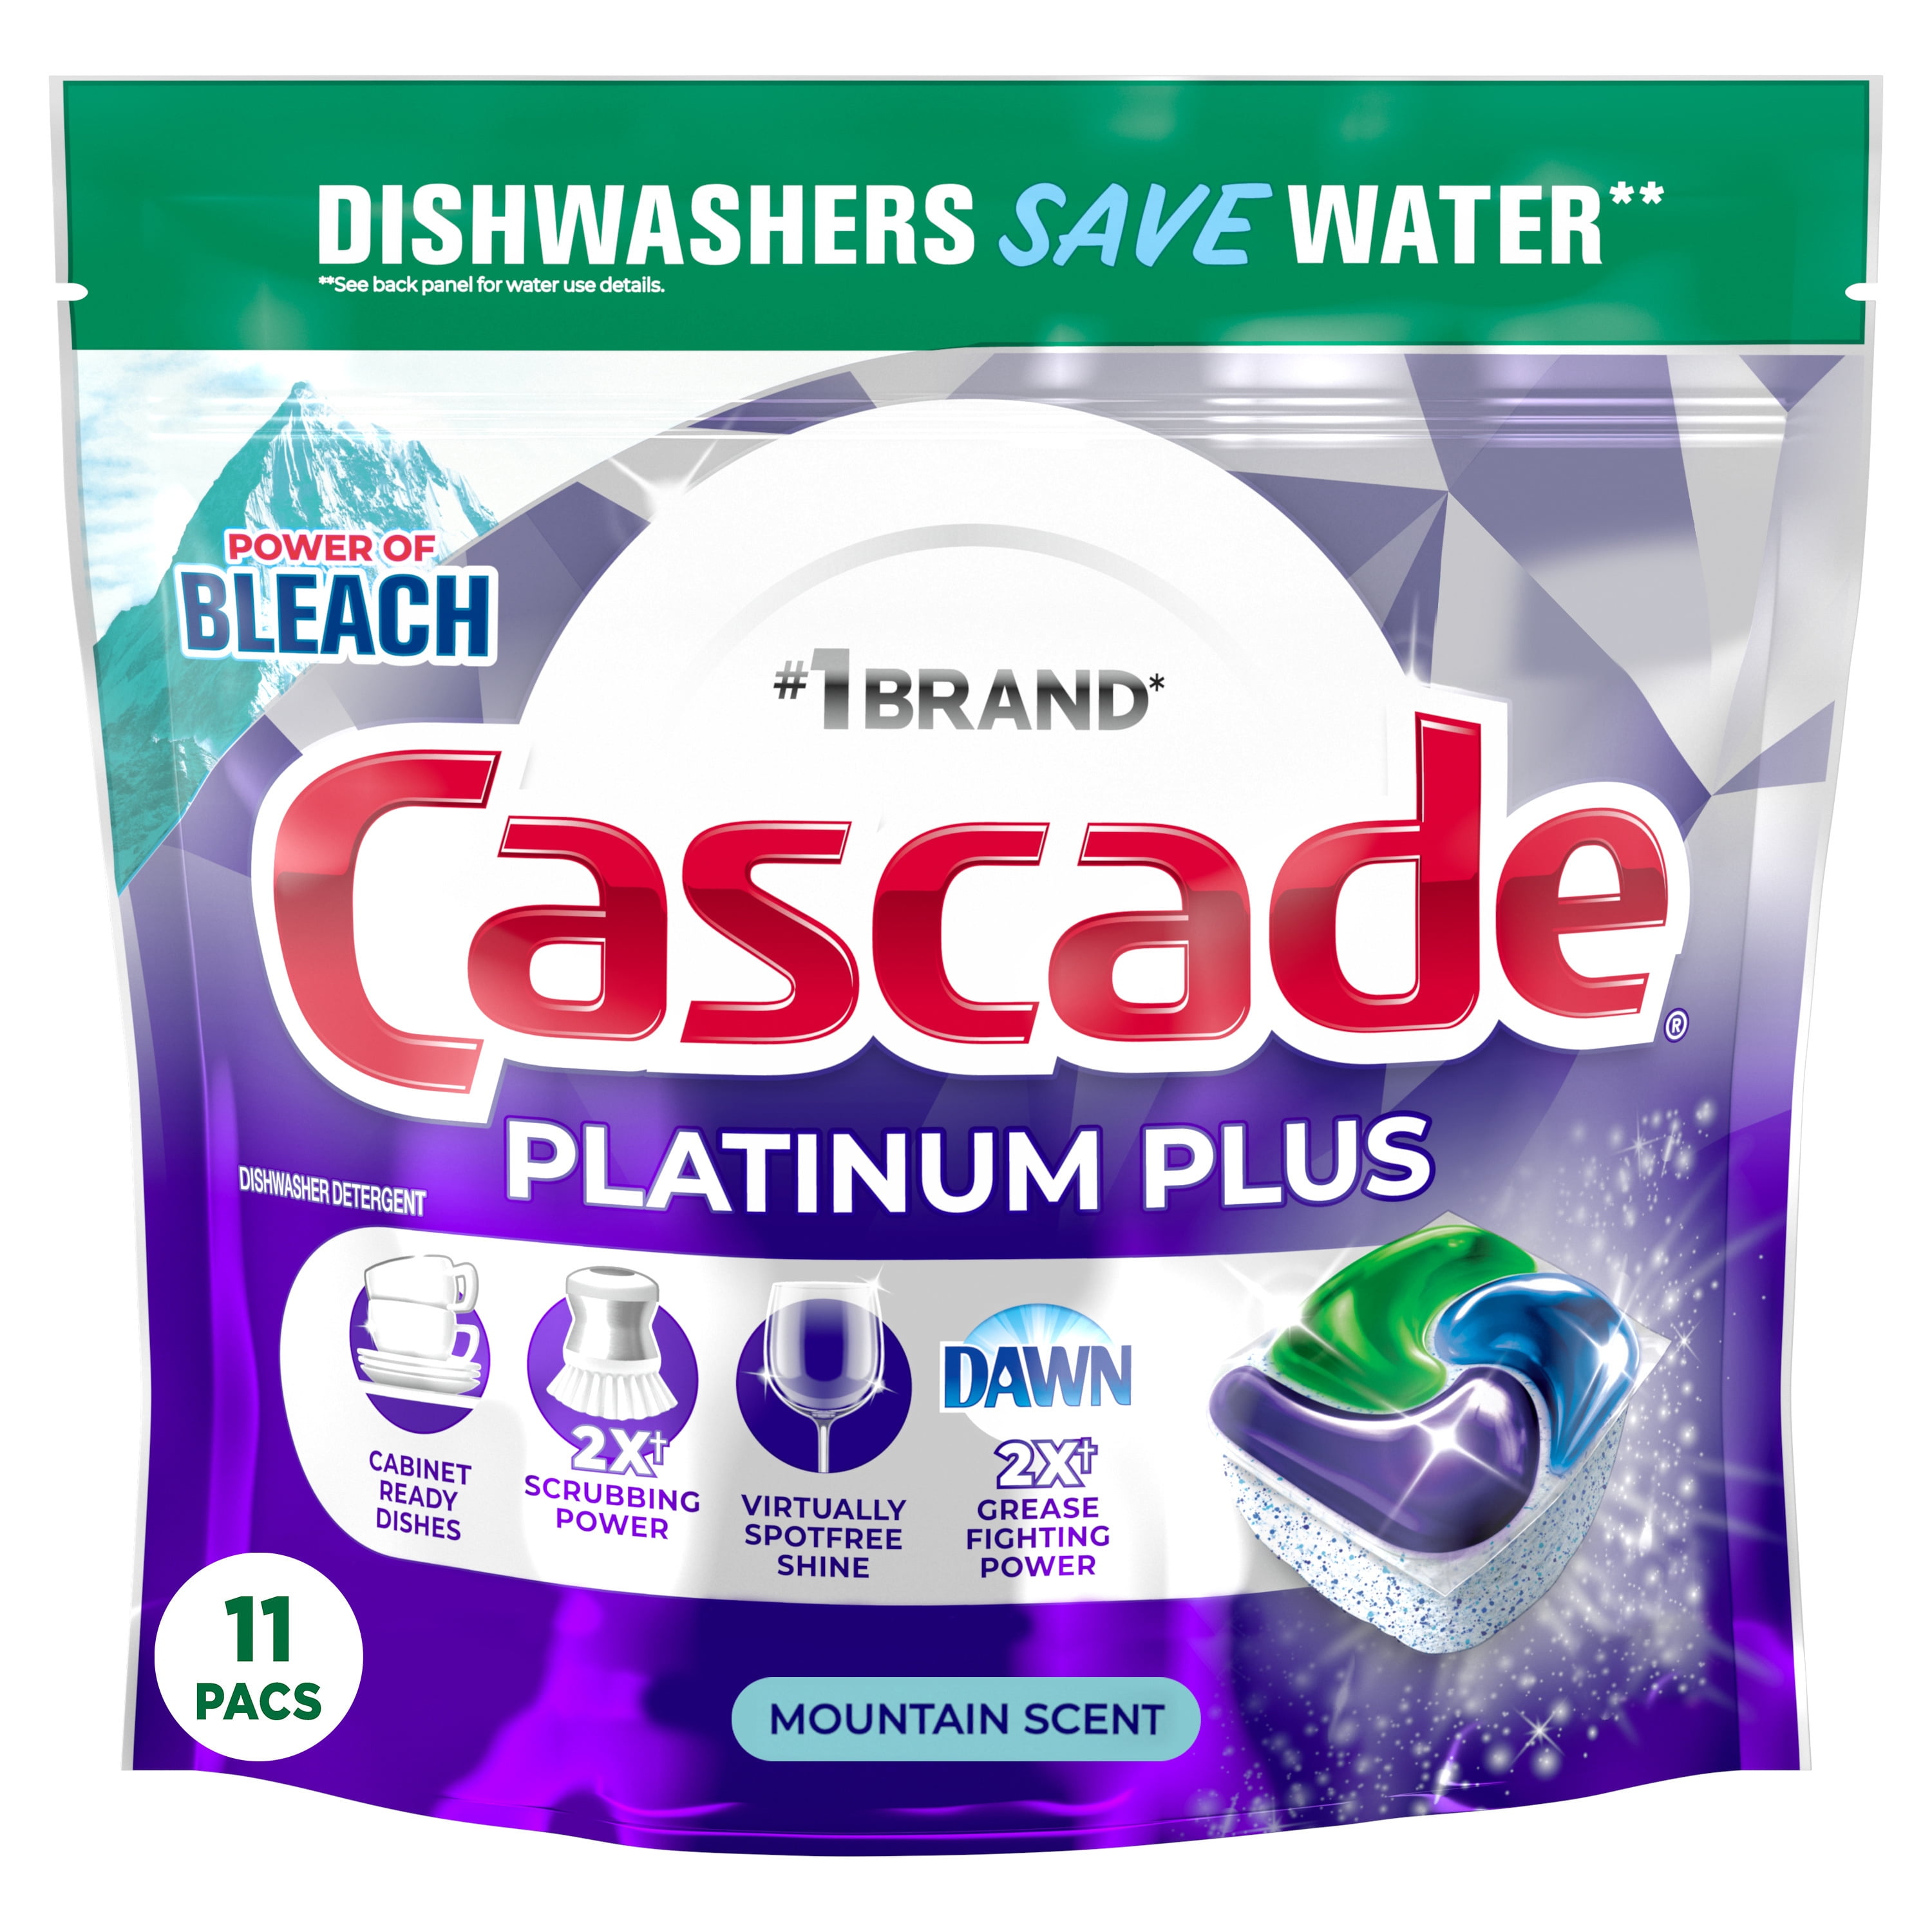 Cascade Platinum Plus Dishwasher Pod Dishwasher Detergent Dishwasher Pods  Dish Detergent ActionPacs Dish Pods Fresh 52 Count Dishwashing Pods  Dishwasher Pods Fresh Scent 52 Count